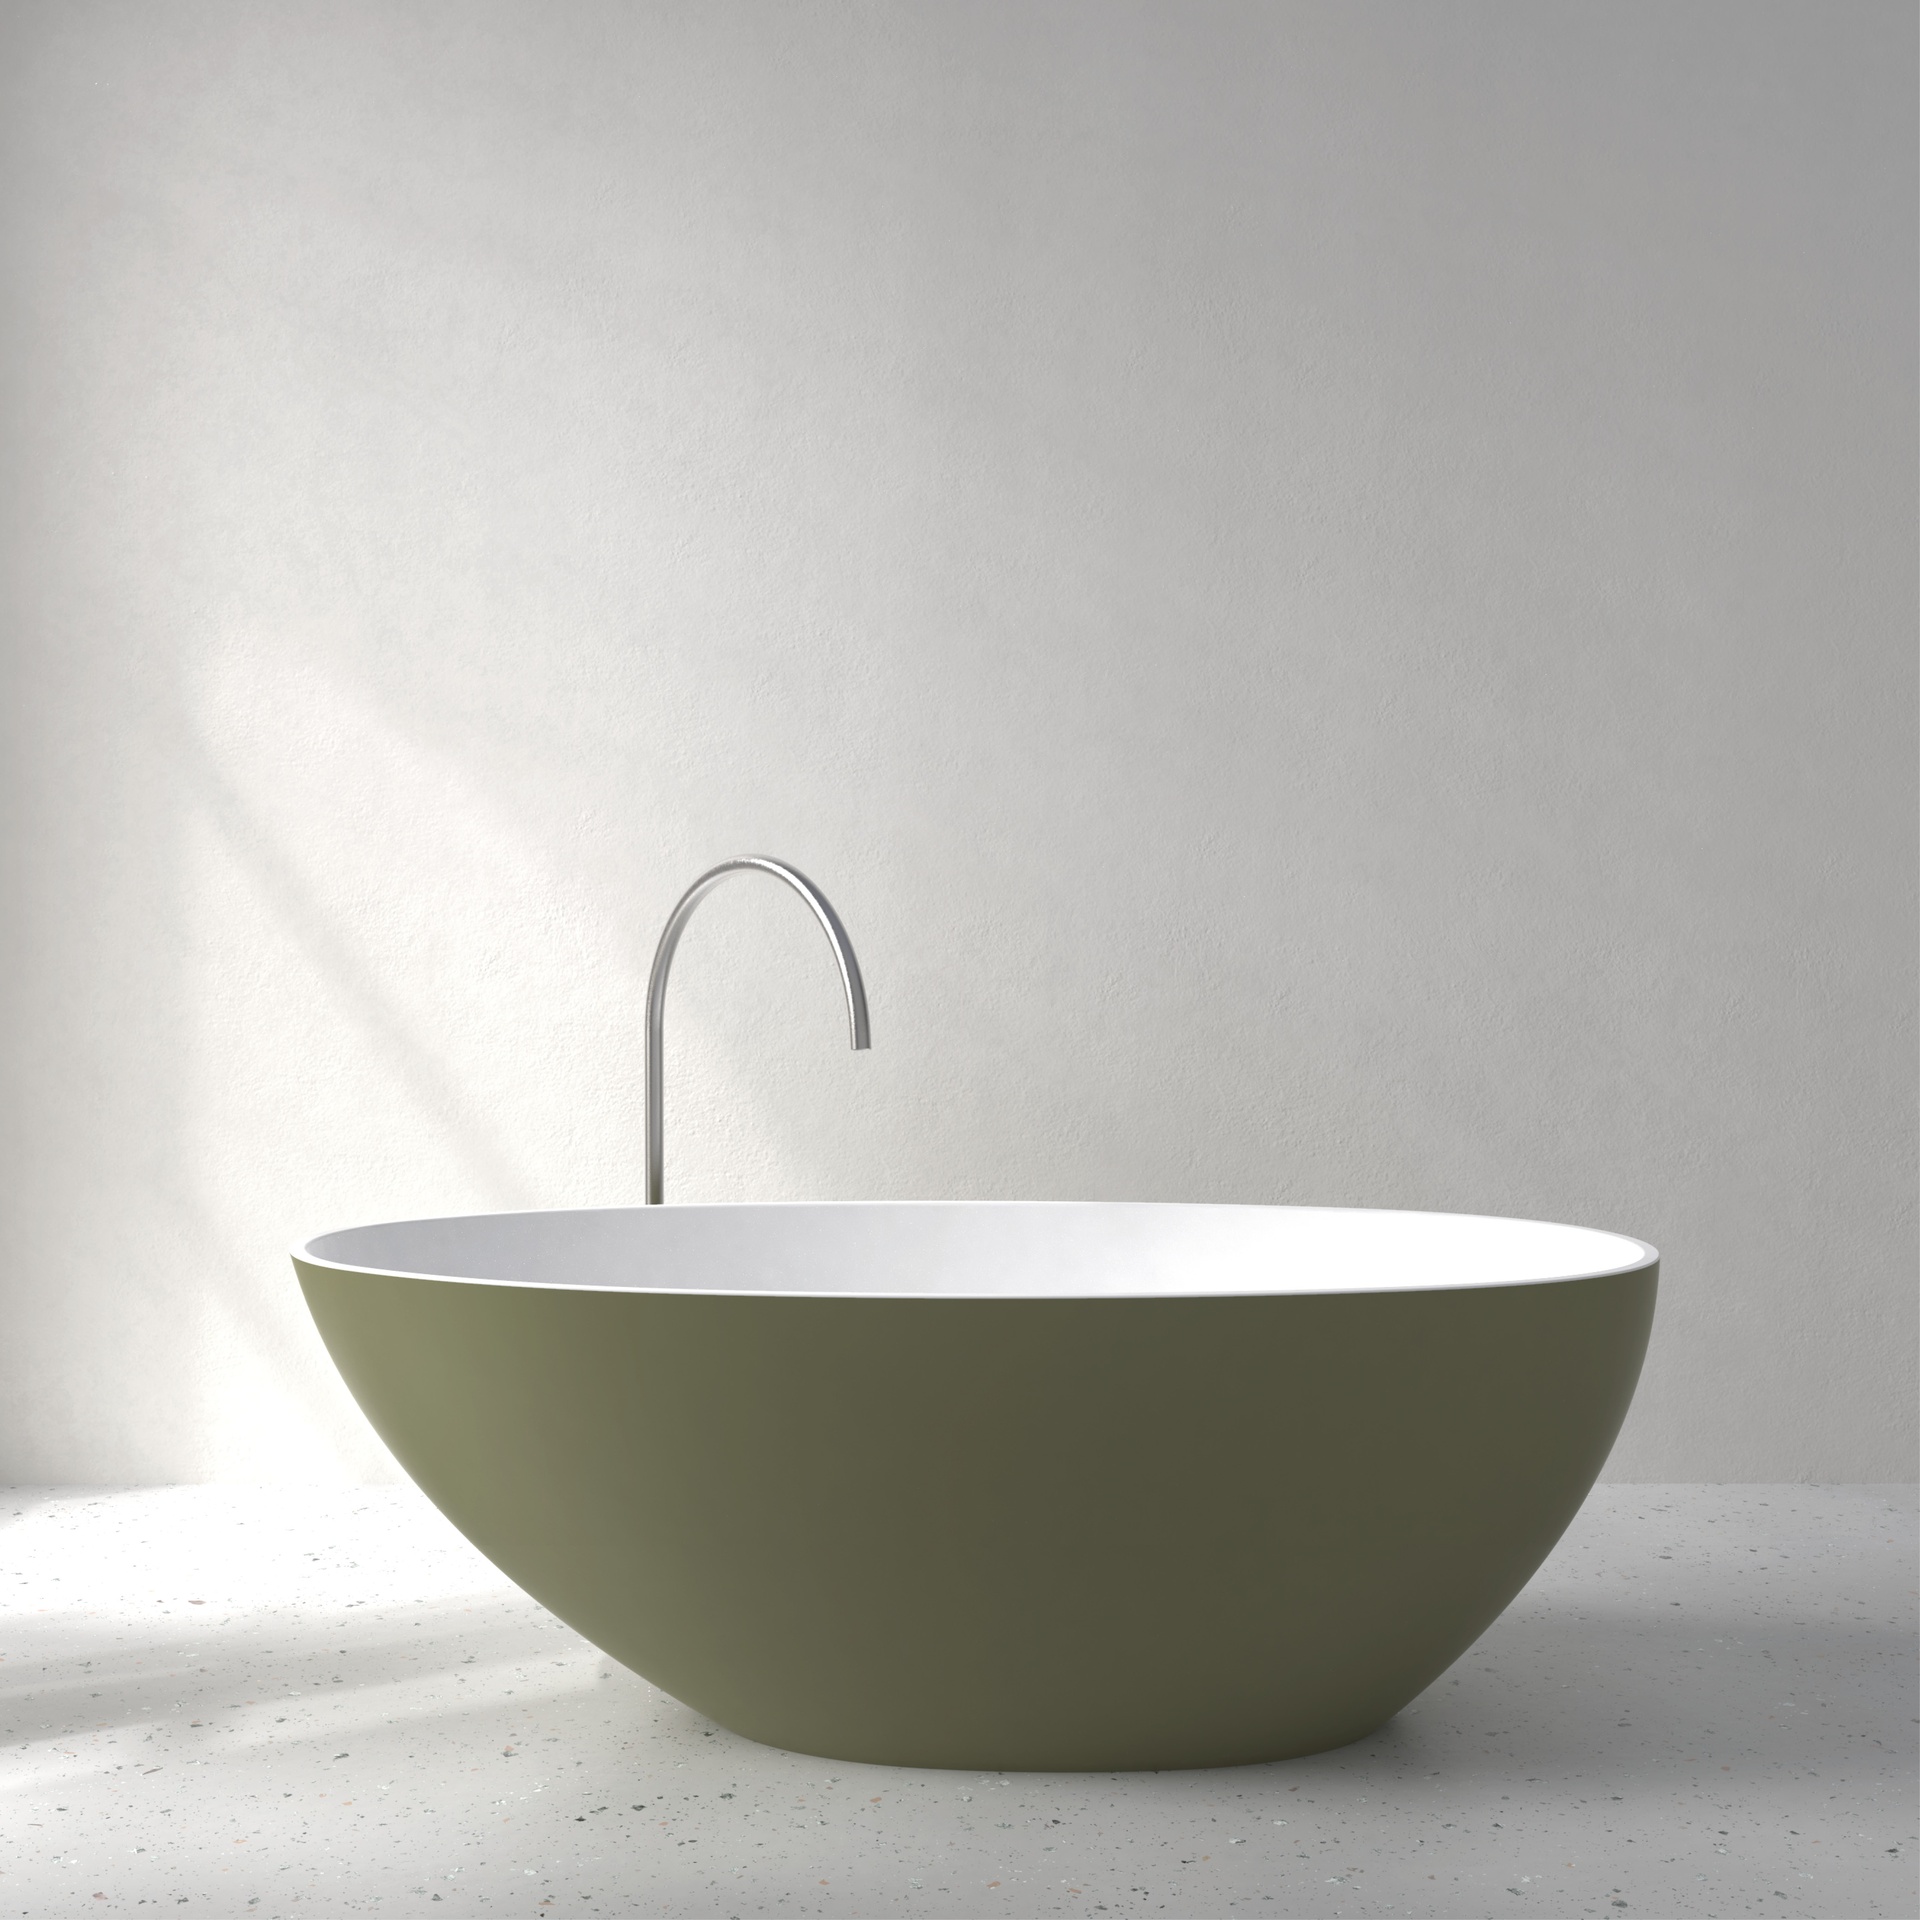 [FEA02-SNCS] Ease bath with Soft Touch (NCS color)